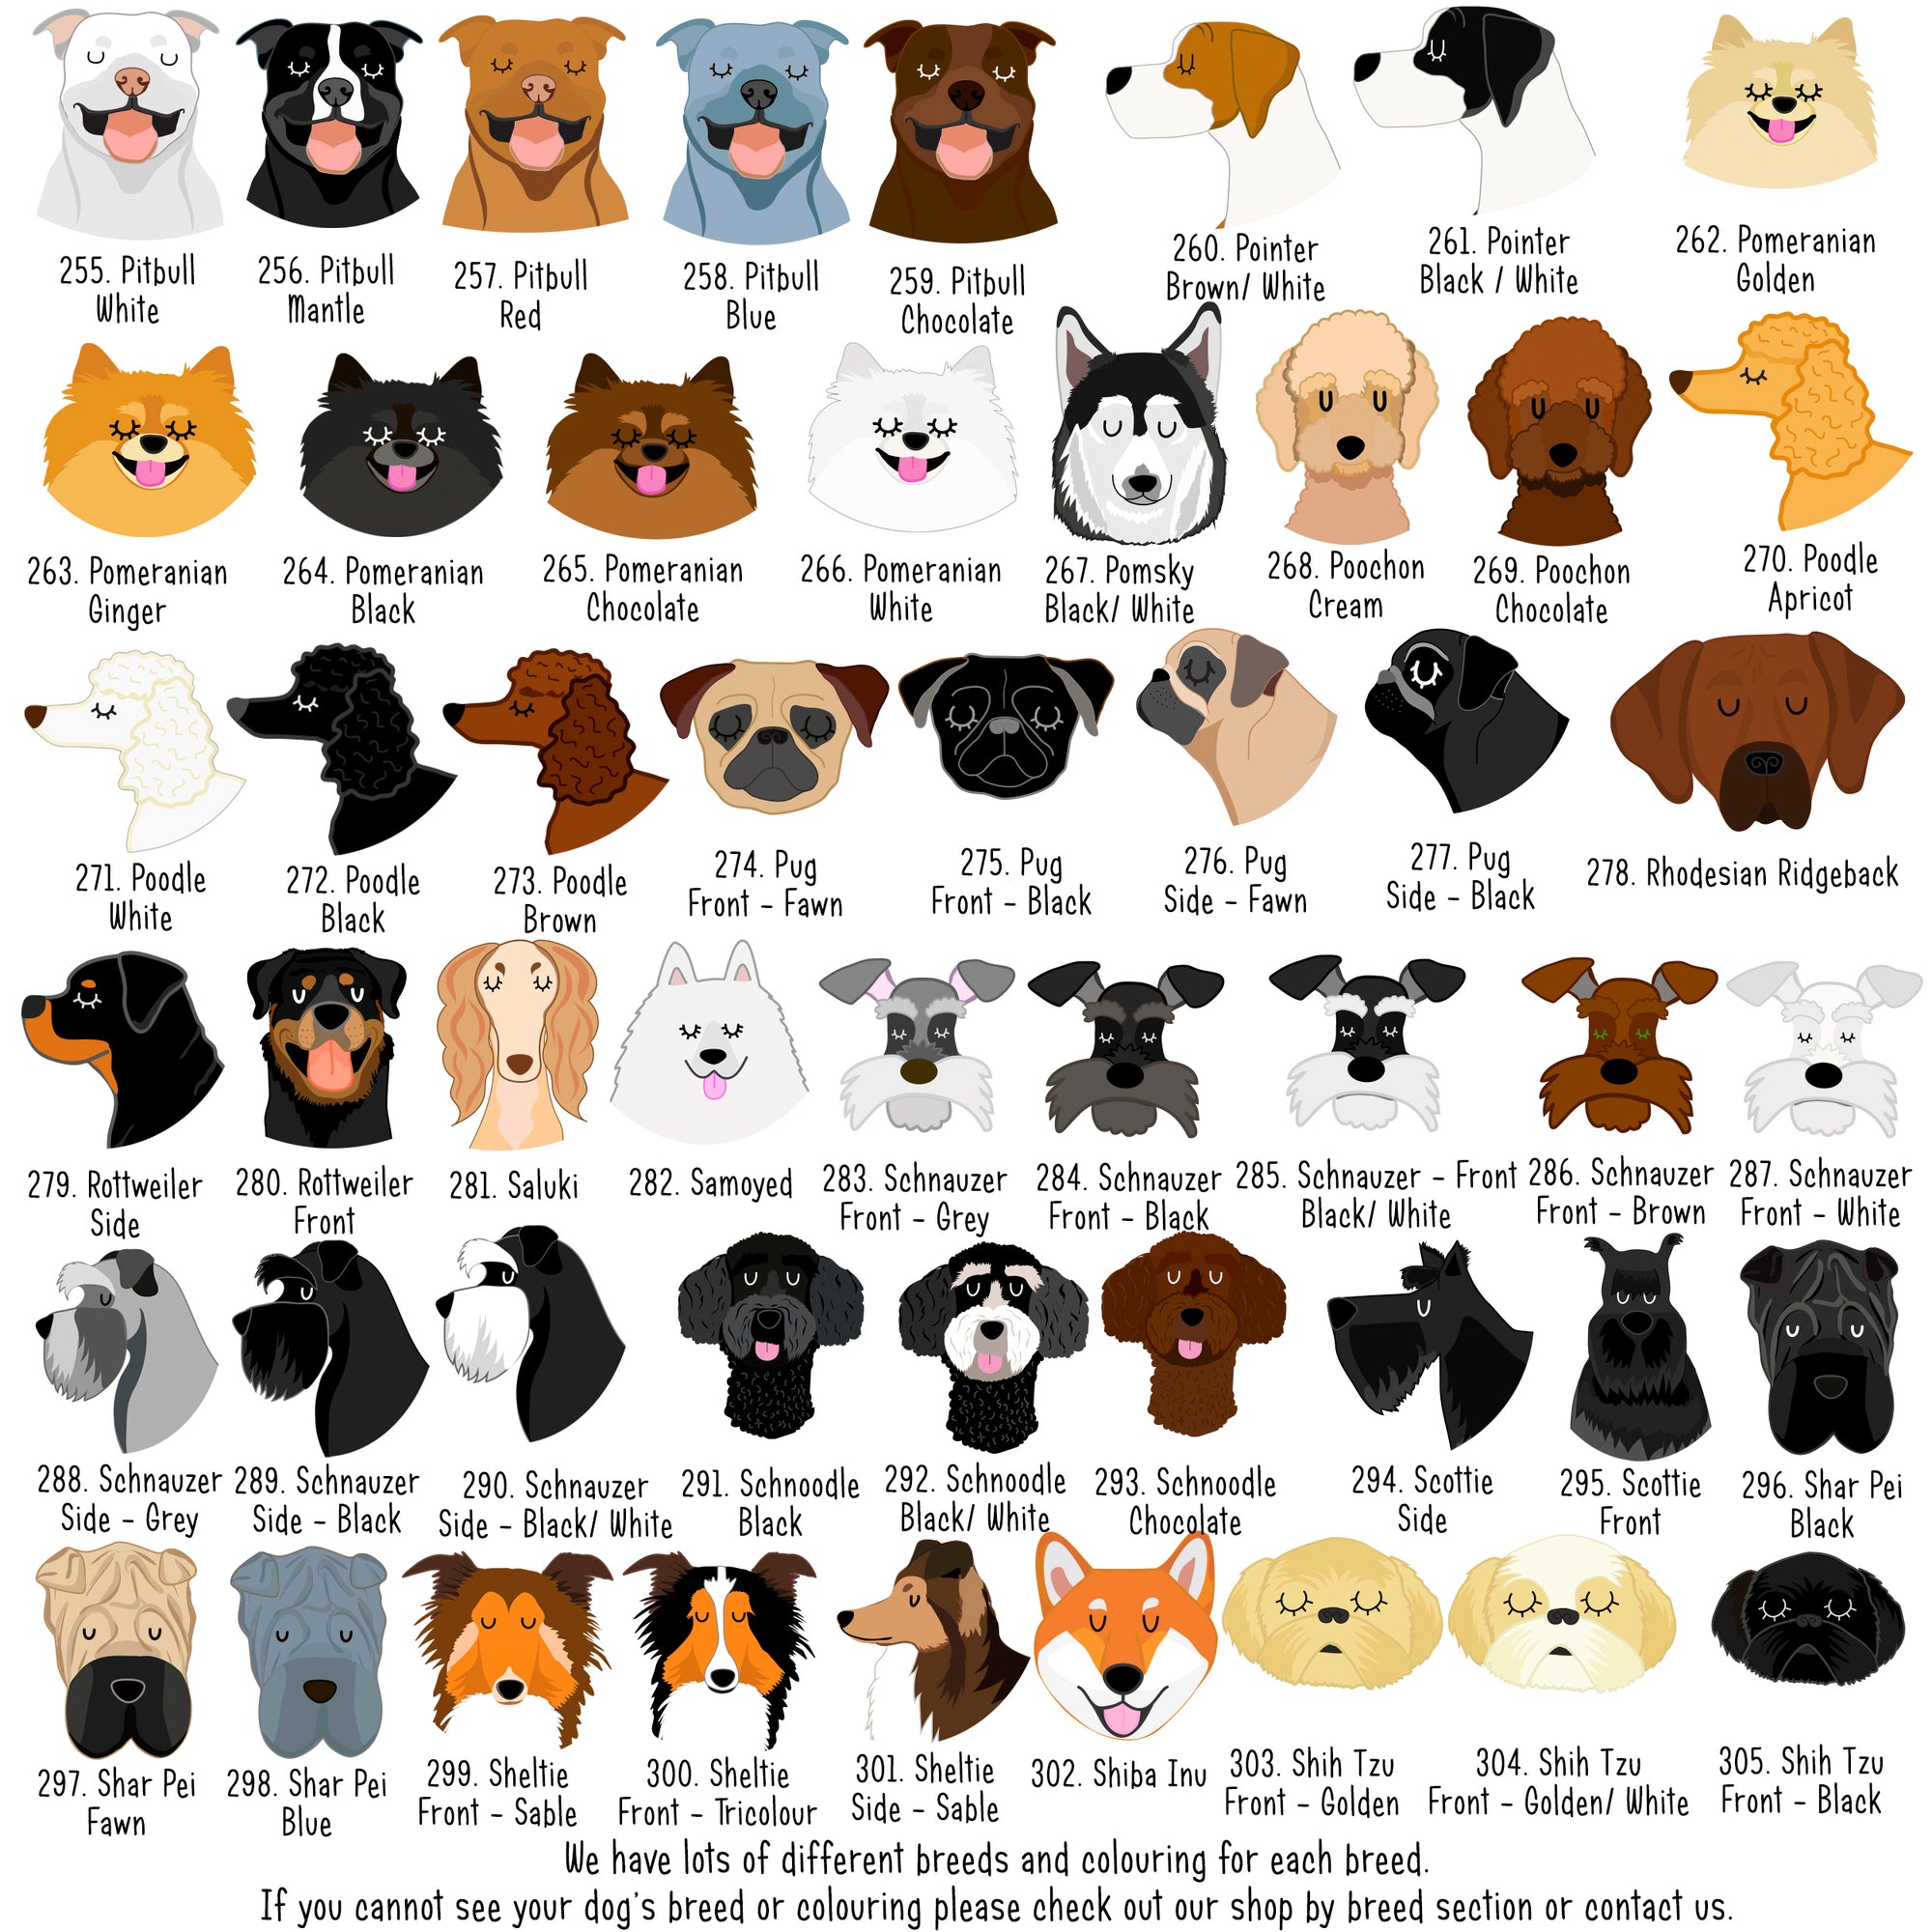 King's Coronation Royal Dog Tag - White CARTOON Dog Illustrations